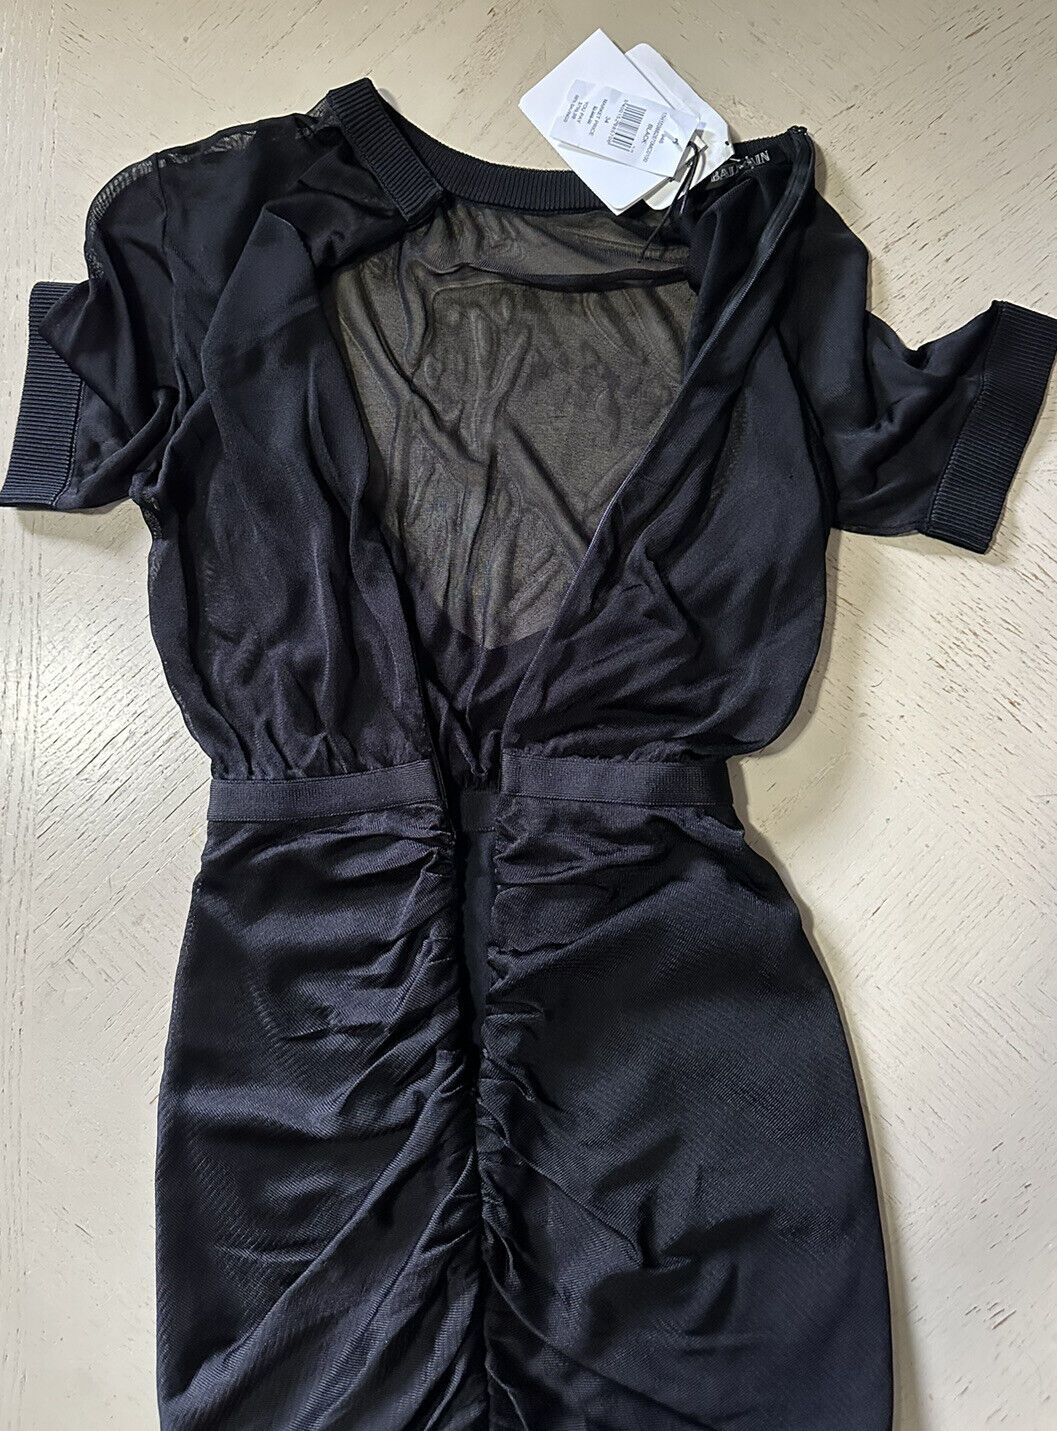 New $2565 Balmain Mesh Wrap Mini Sheath Dress Black Size 34/2 France